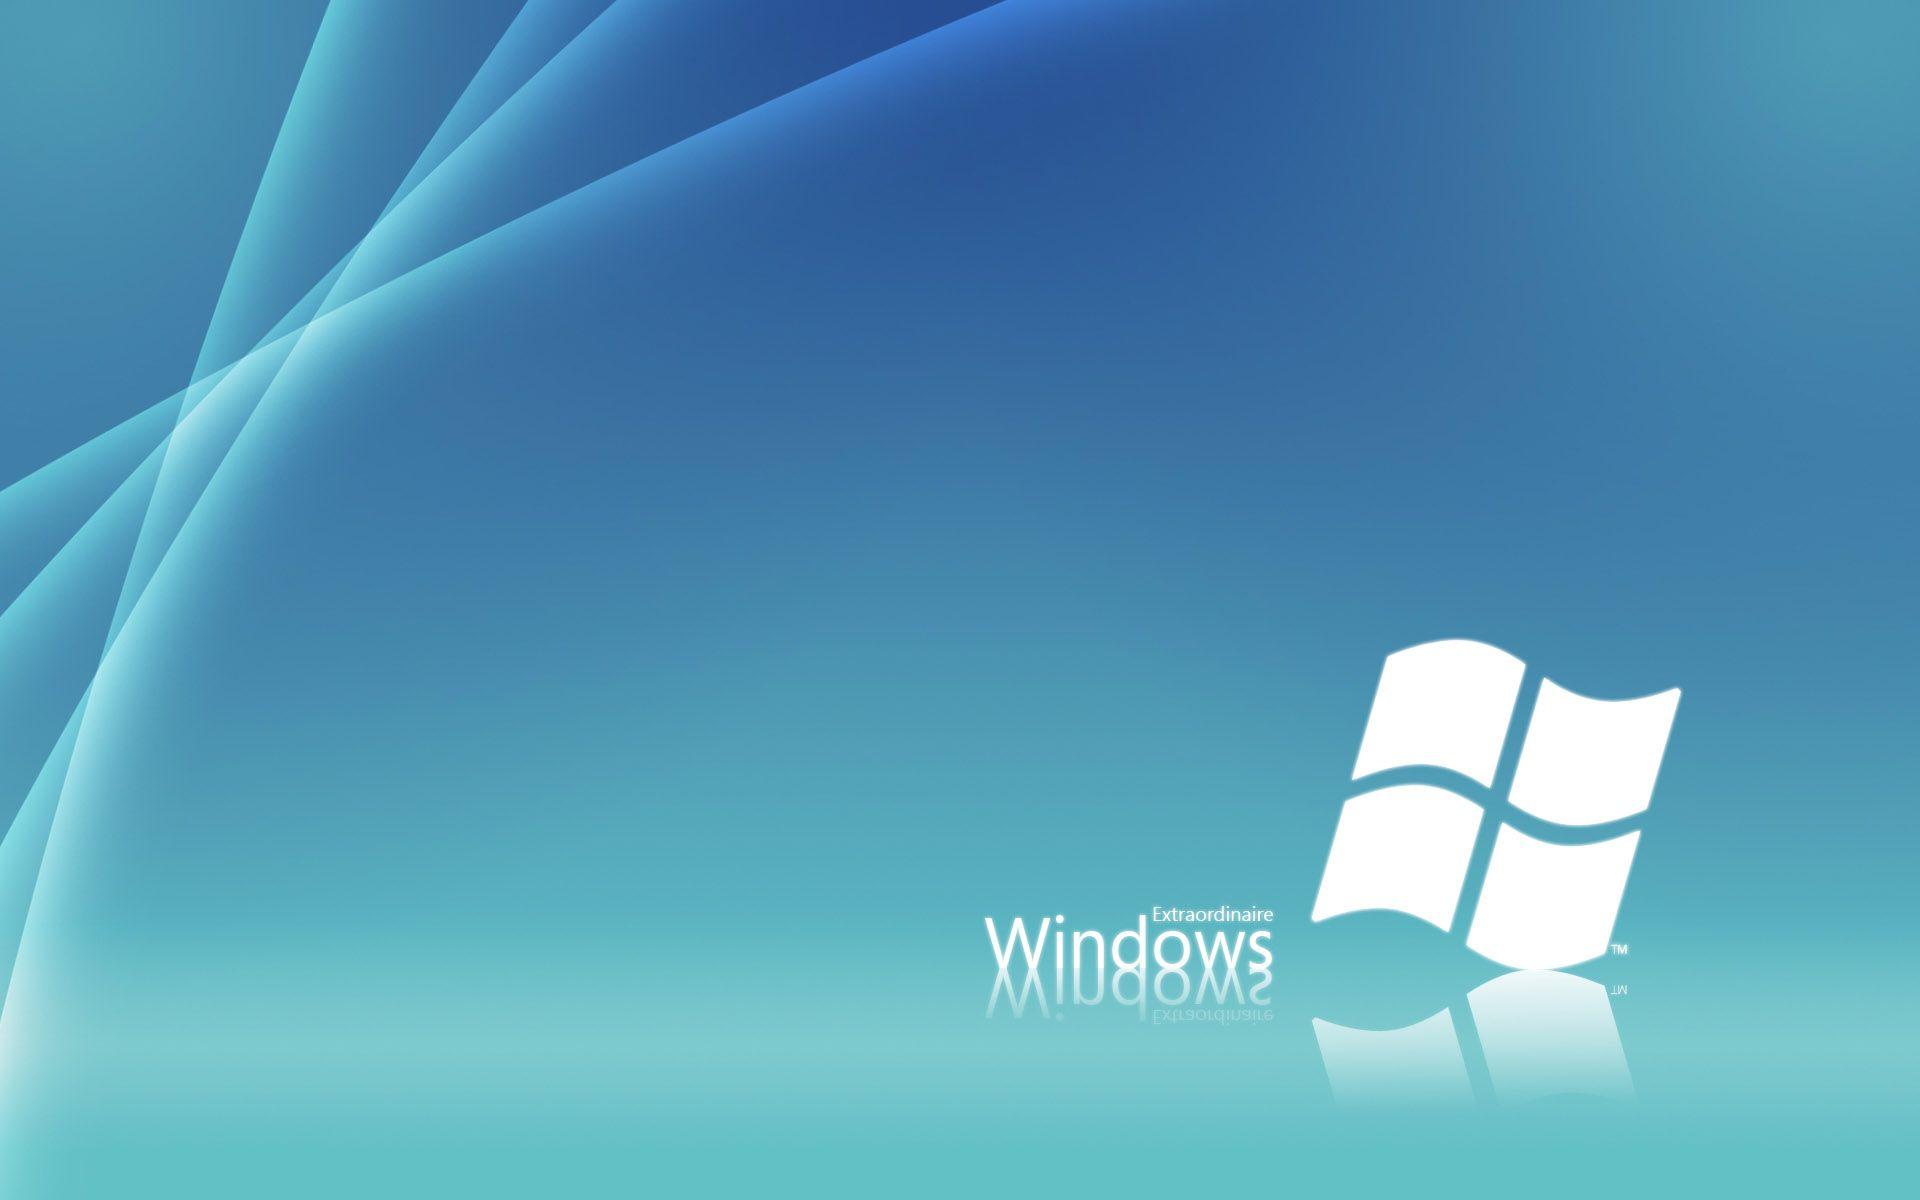 Windows 7 wallpaper